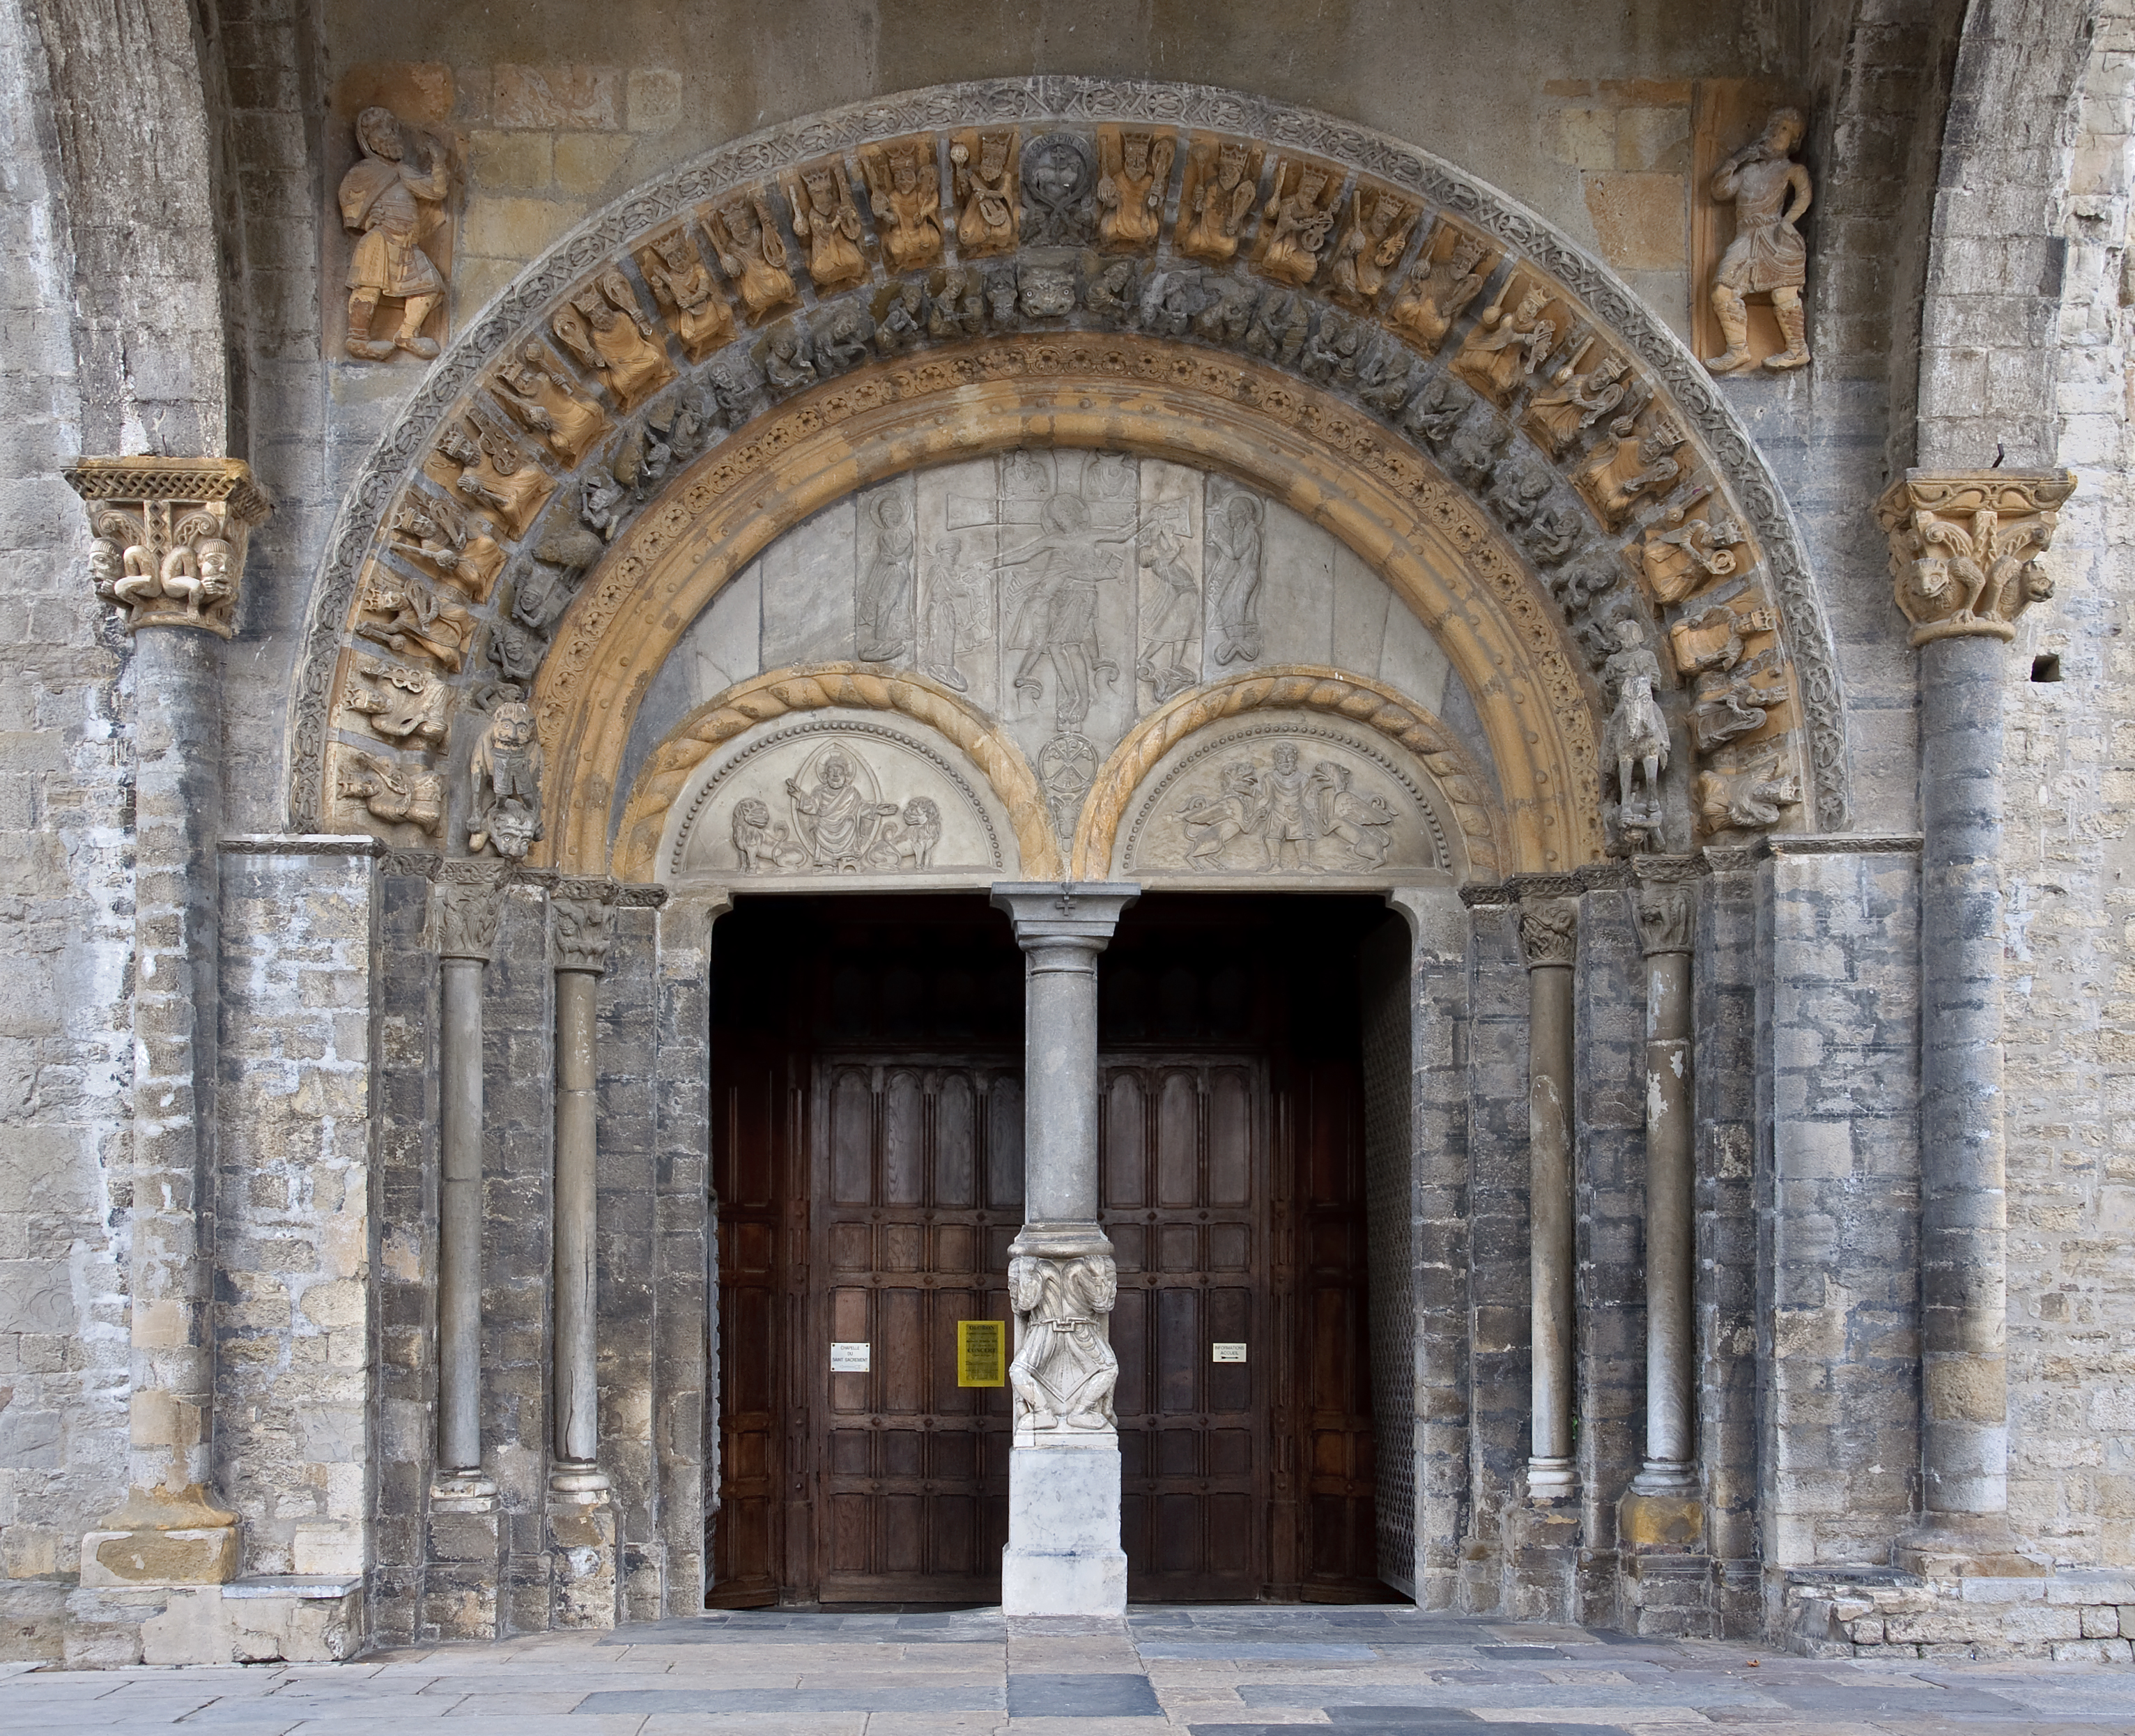 Cathedrale Sainte-Marie Oloron portail